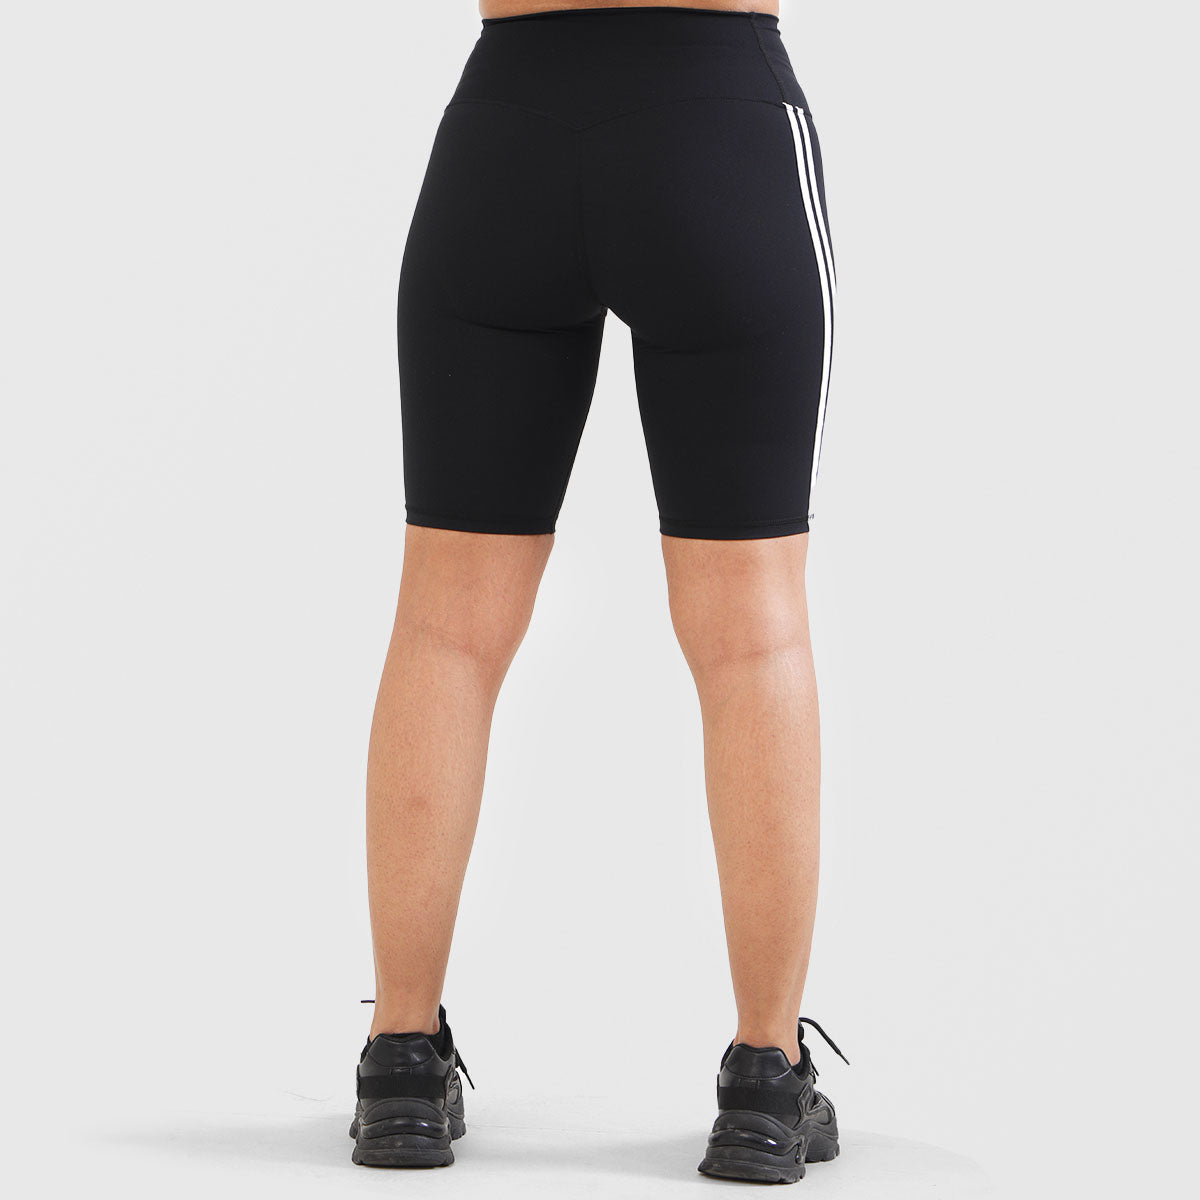 GA Aerobic Shorts (Black)